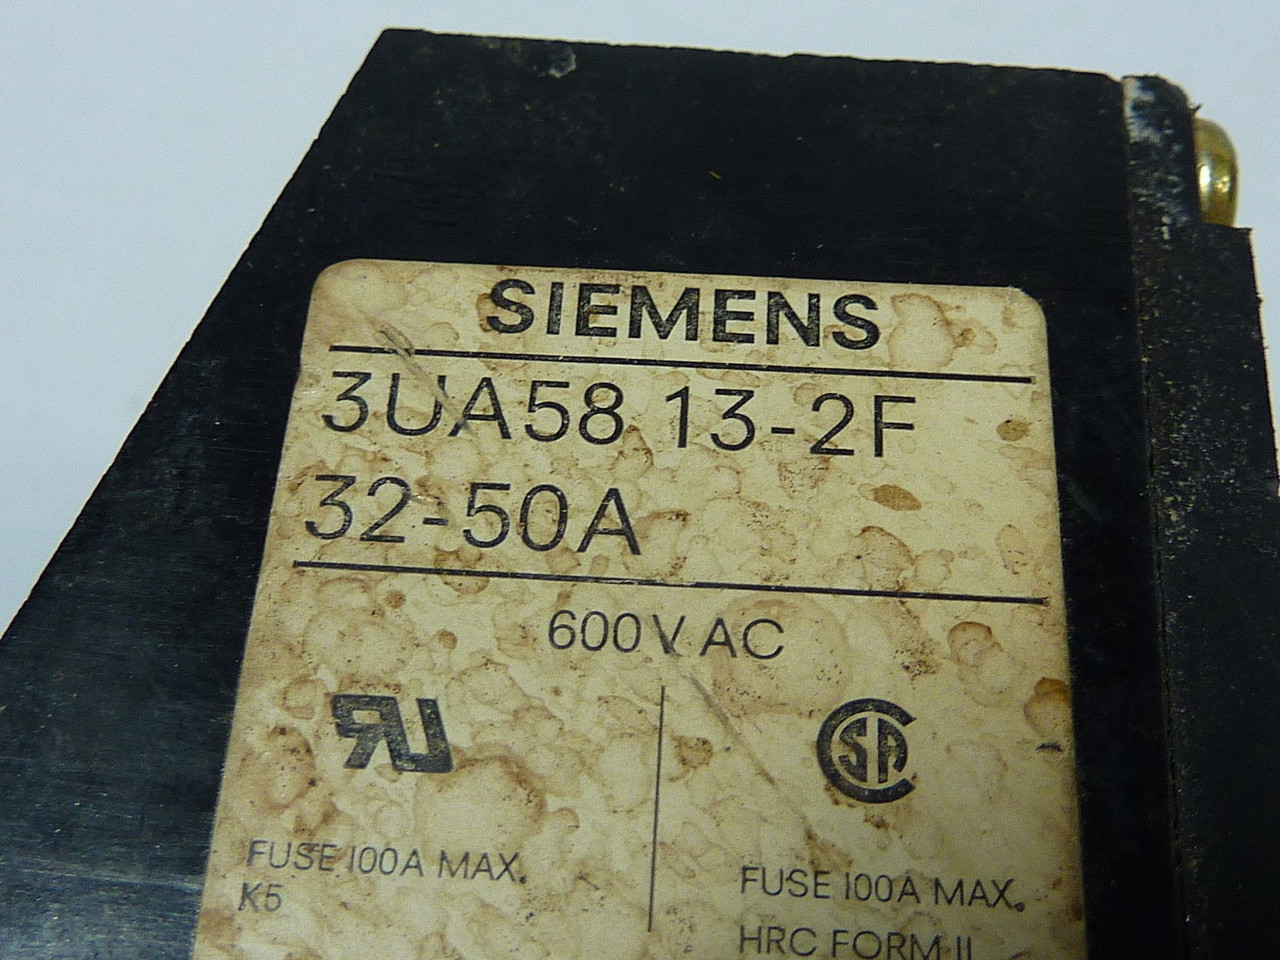 Siemens 3UA58-13-2F Overload Relay 32-50A USED